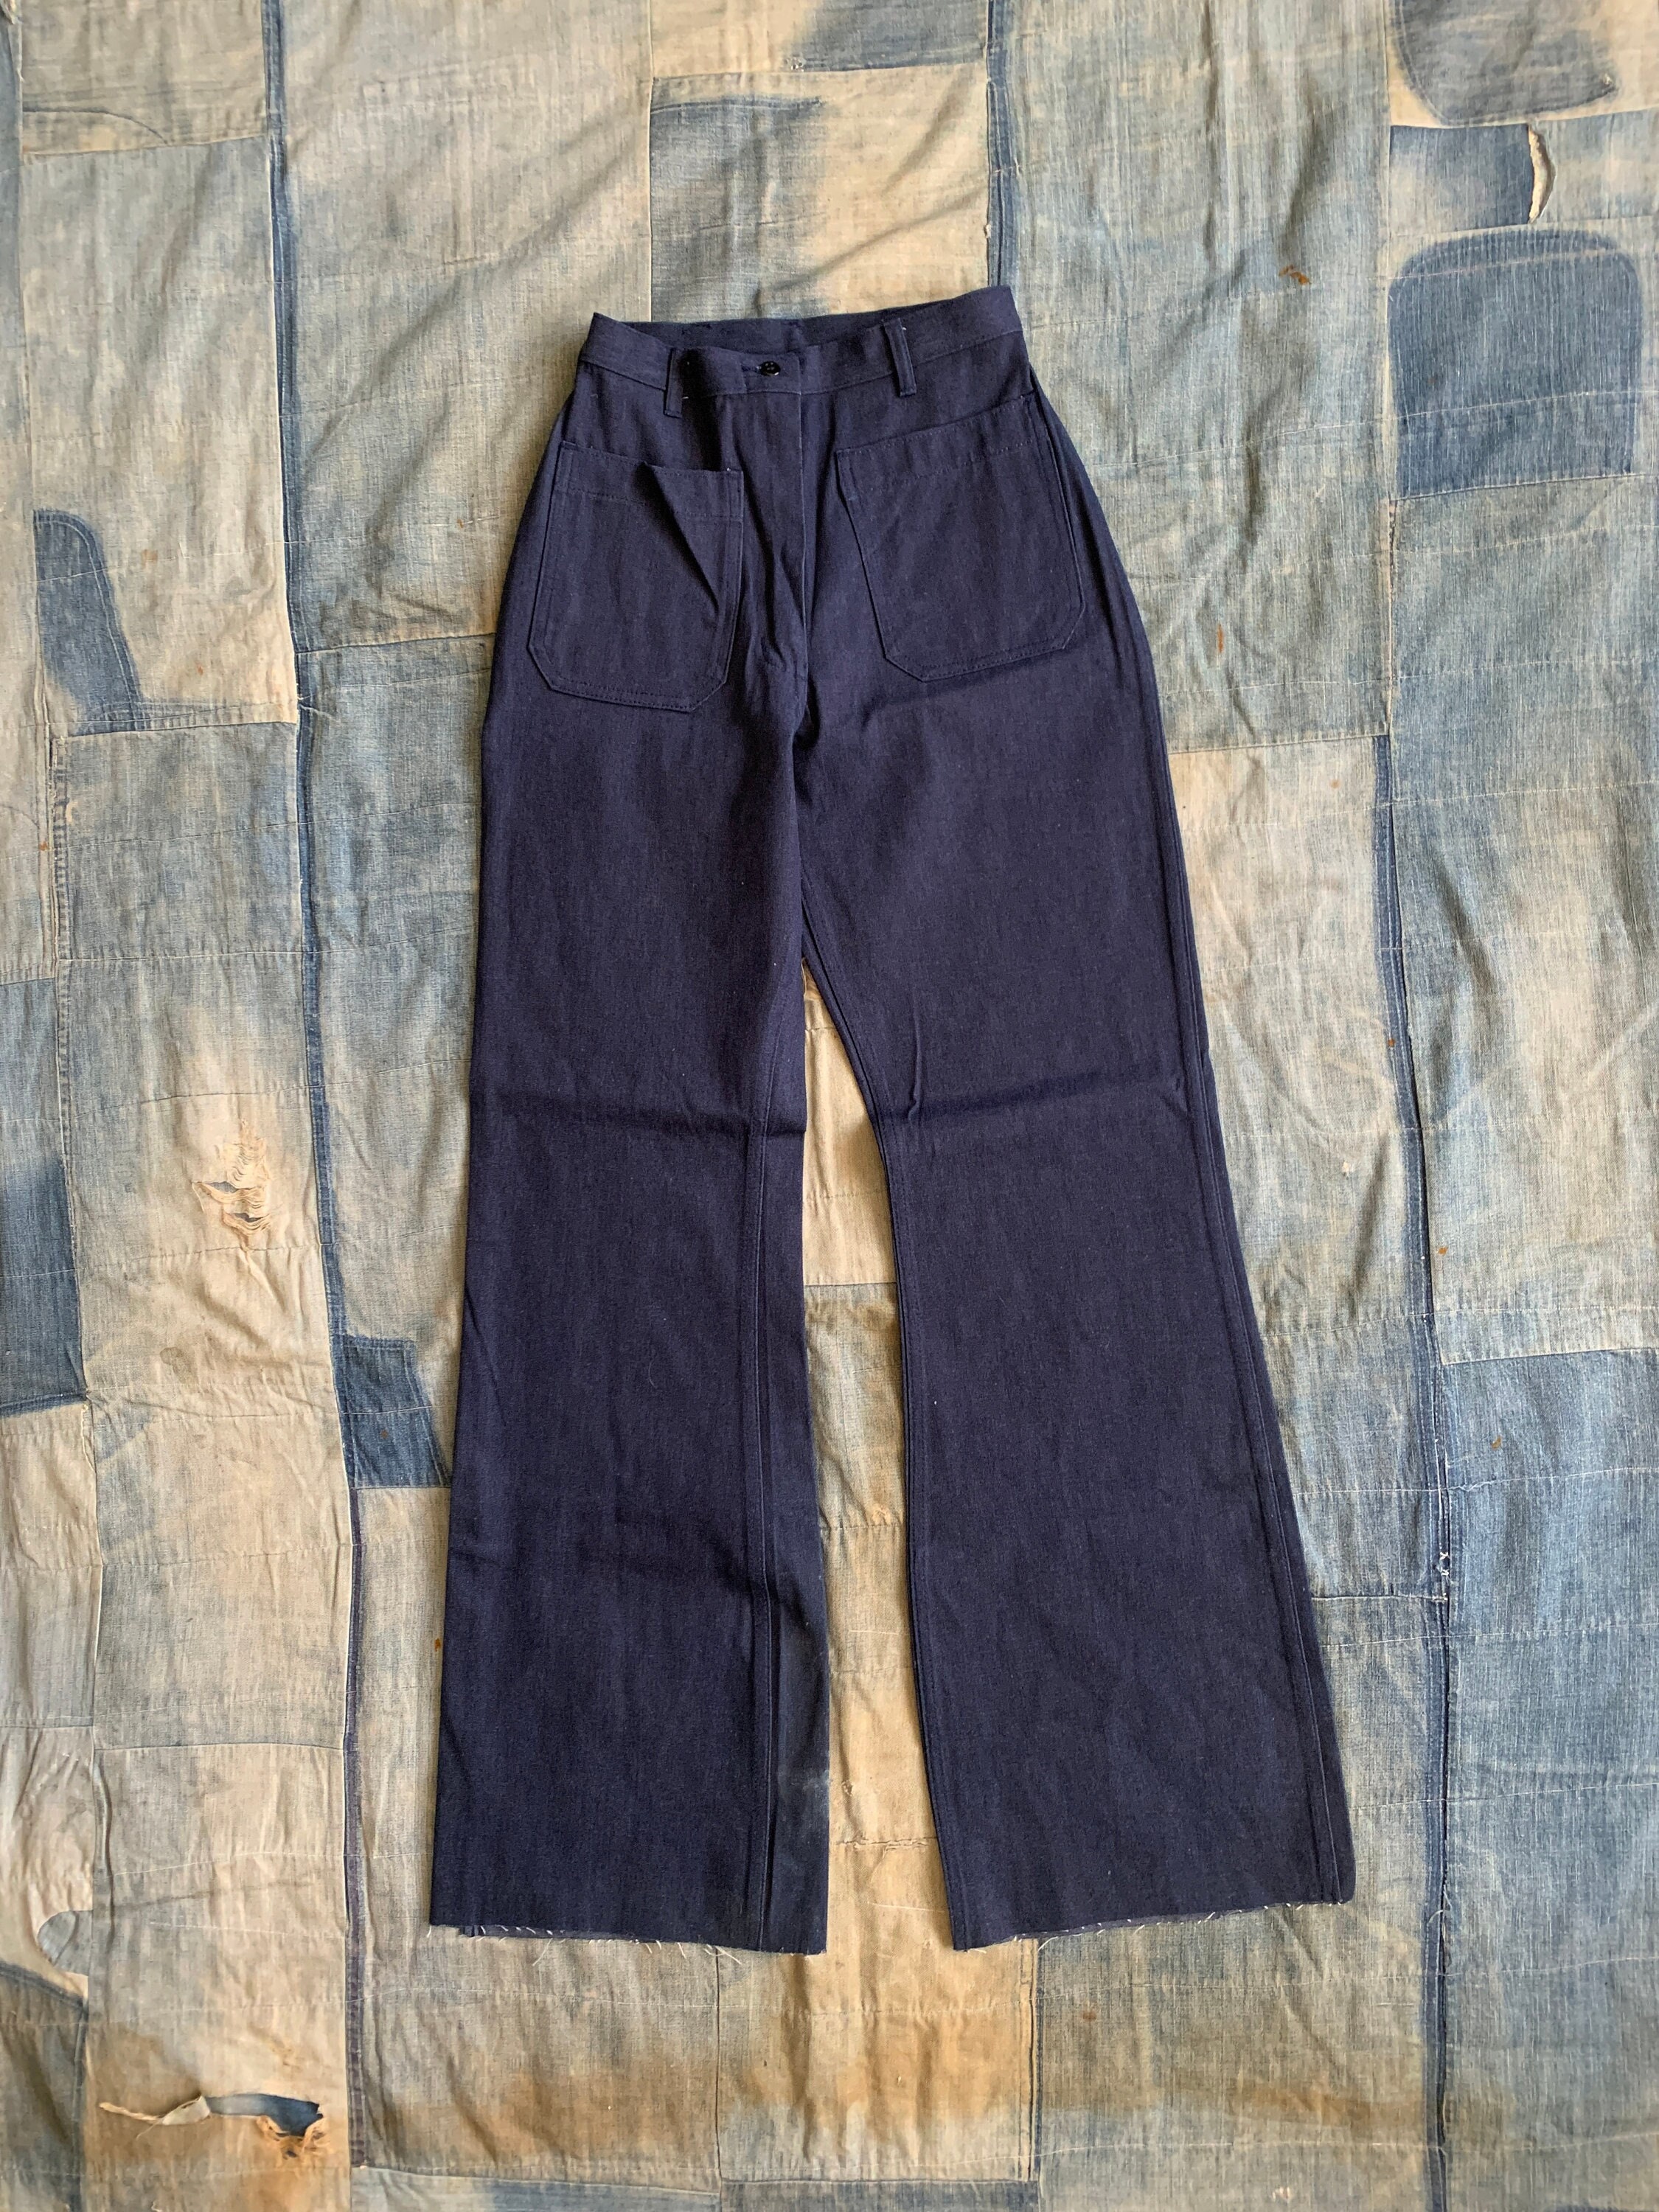 1960's Seafarer Big Bell Bellbottom Jeans U.S. Navy Sailor Authentic  Original Issue Vintage Hippie Mod Military Bellbottom Sailor Pants -   Singapore